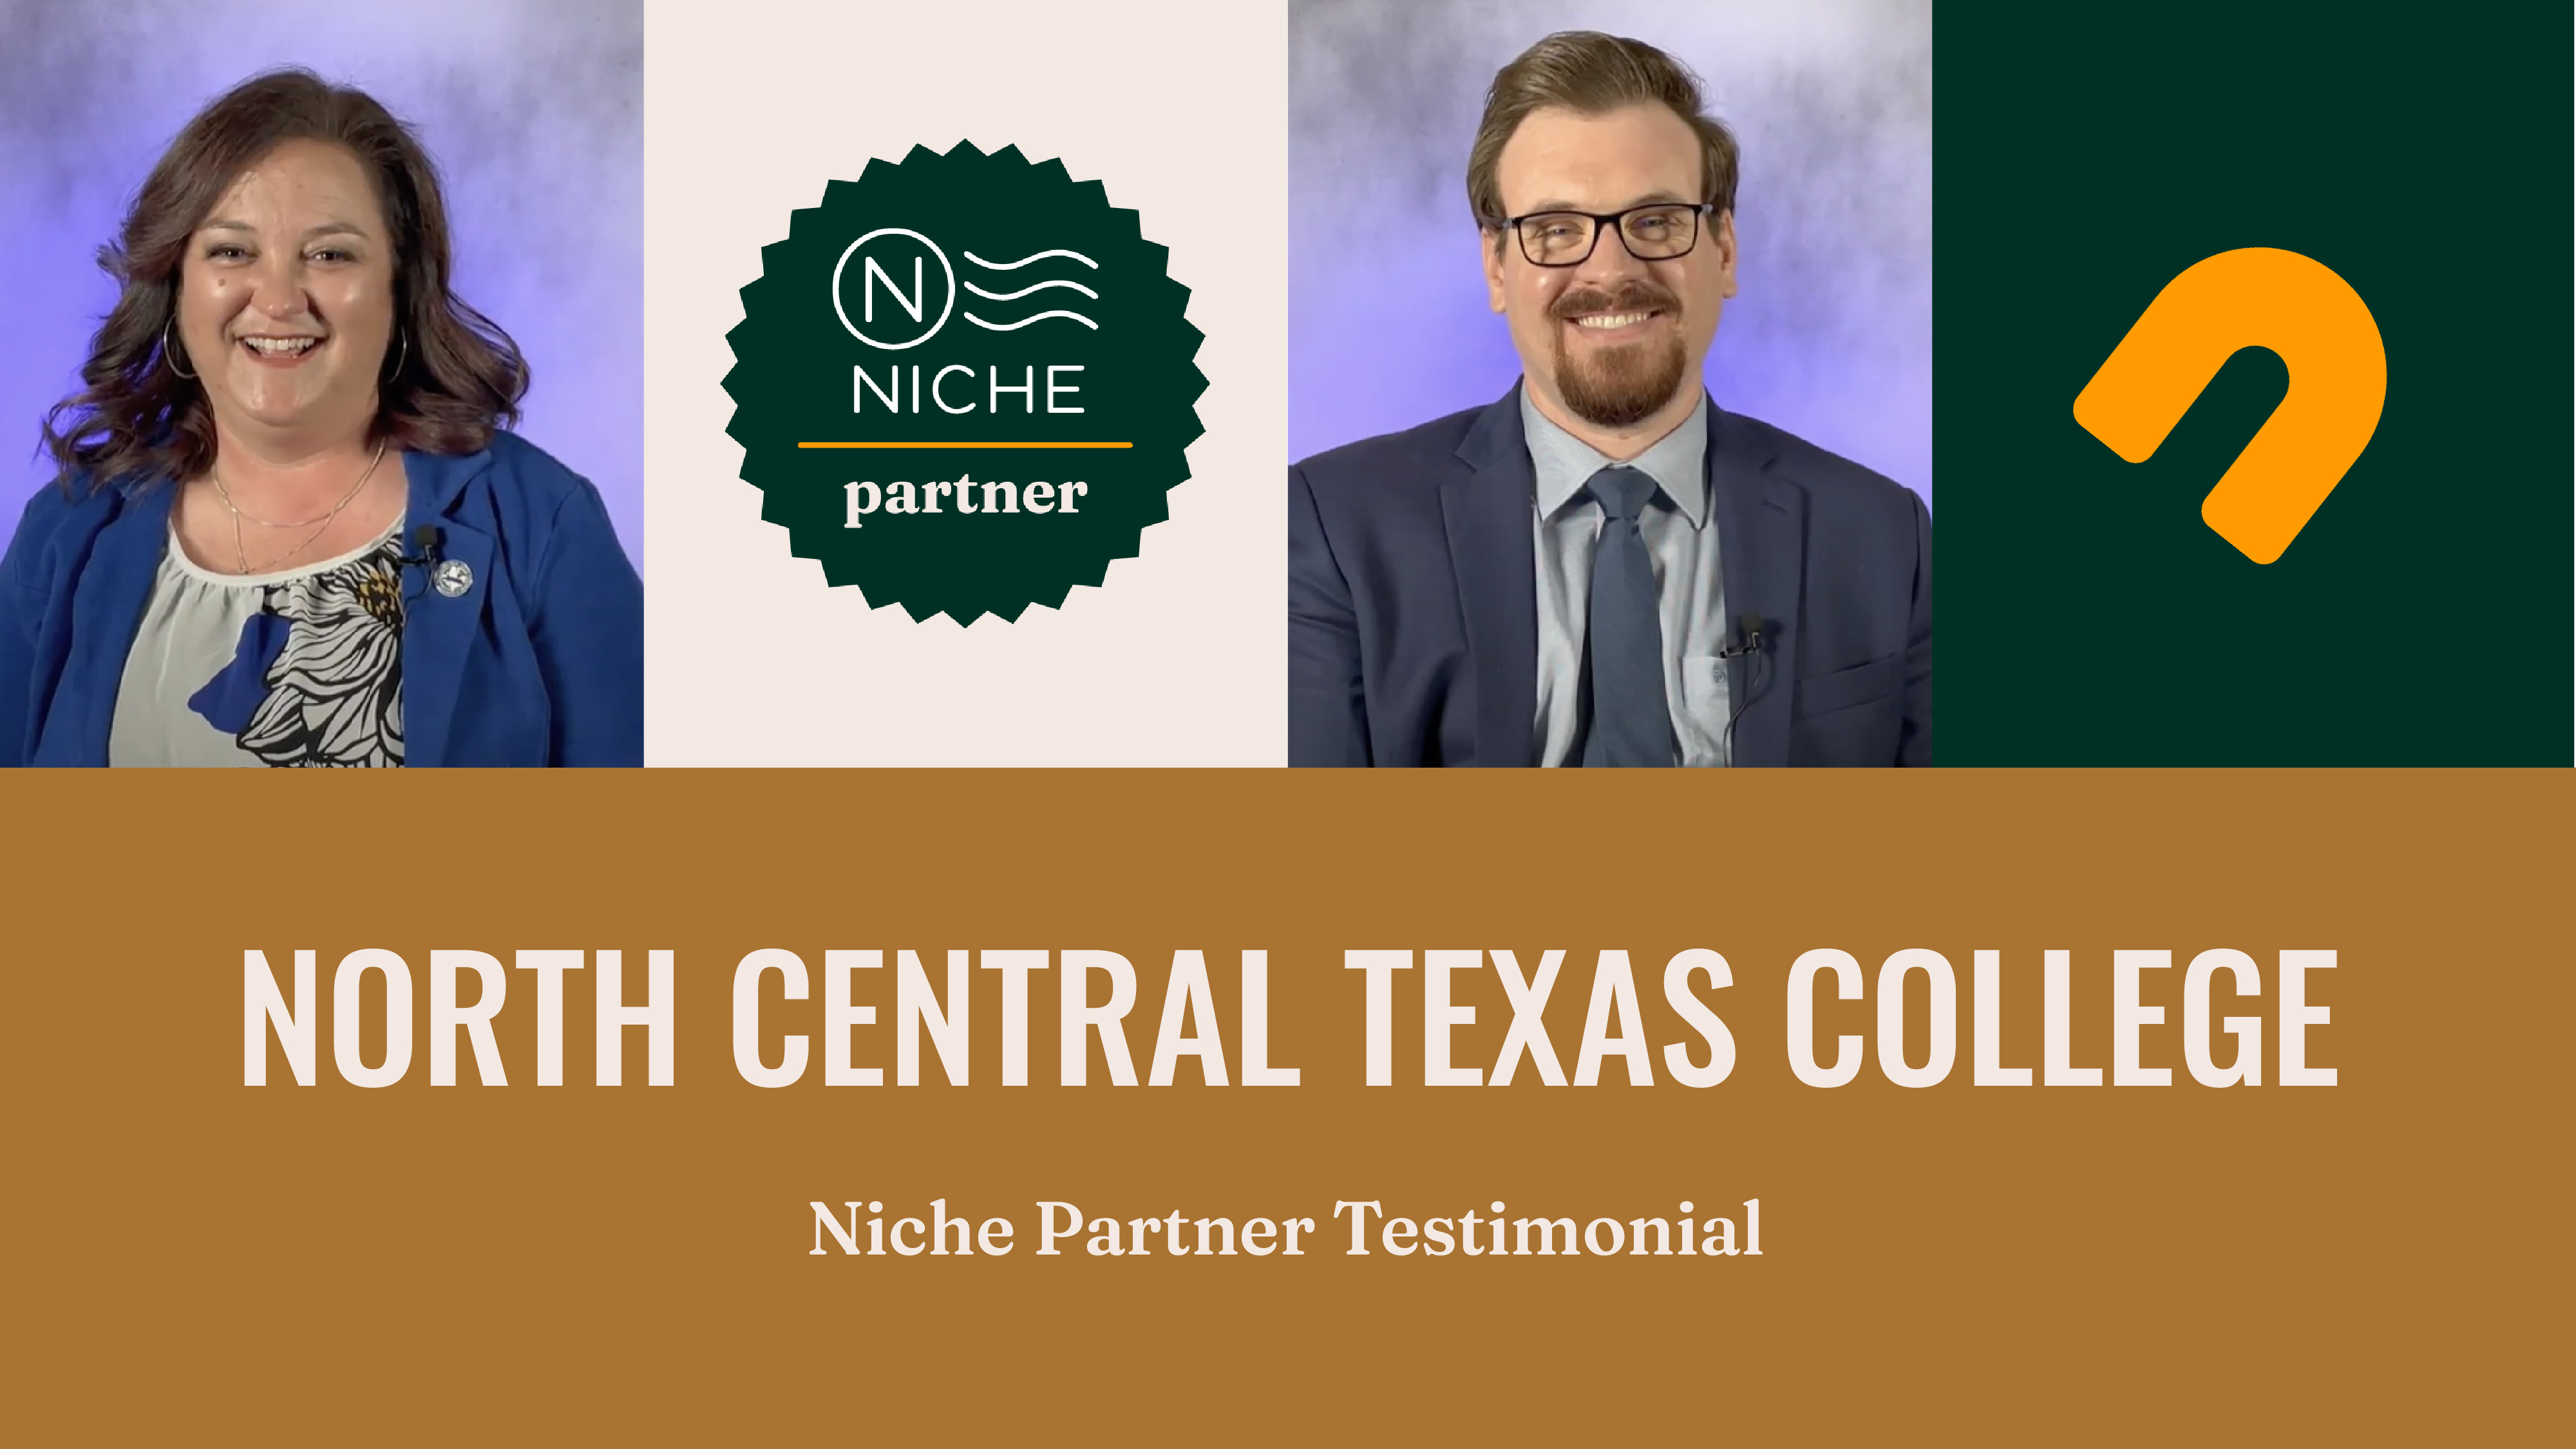 North Central Texas College and Niche